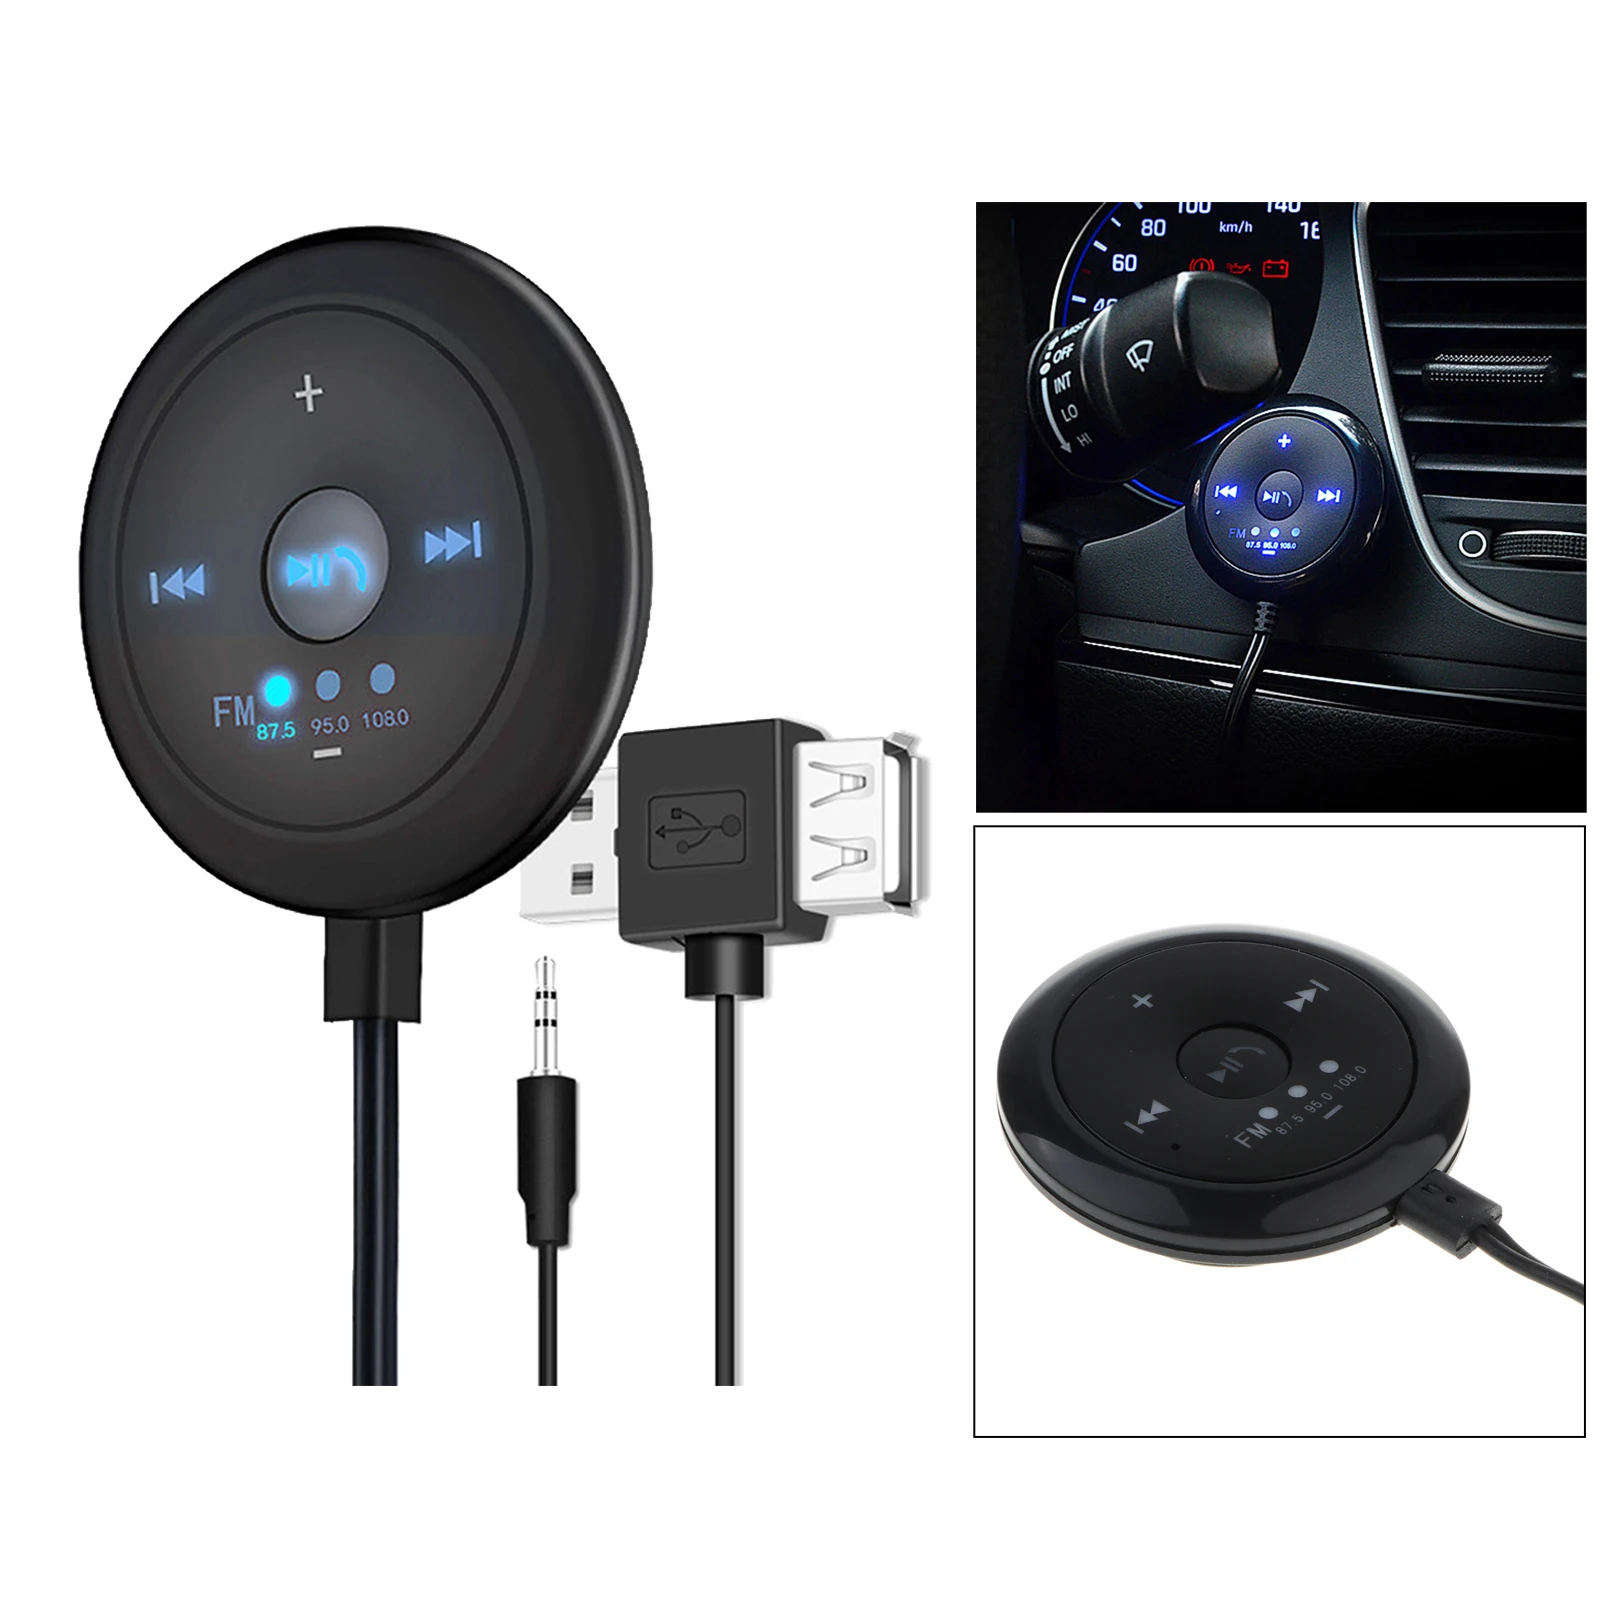 1 Pcs 2 In 1 Car Bluetooth 5.0 Player 500mAh FM AUX Transmitter 5V Input For Tablet Phone Etc V5.0+EDR BT